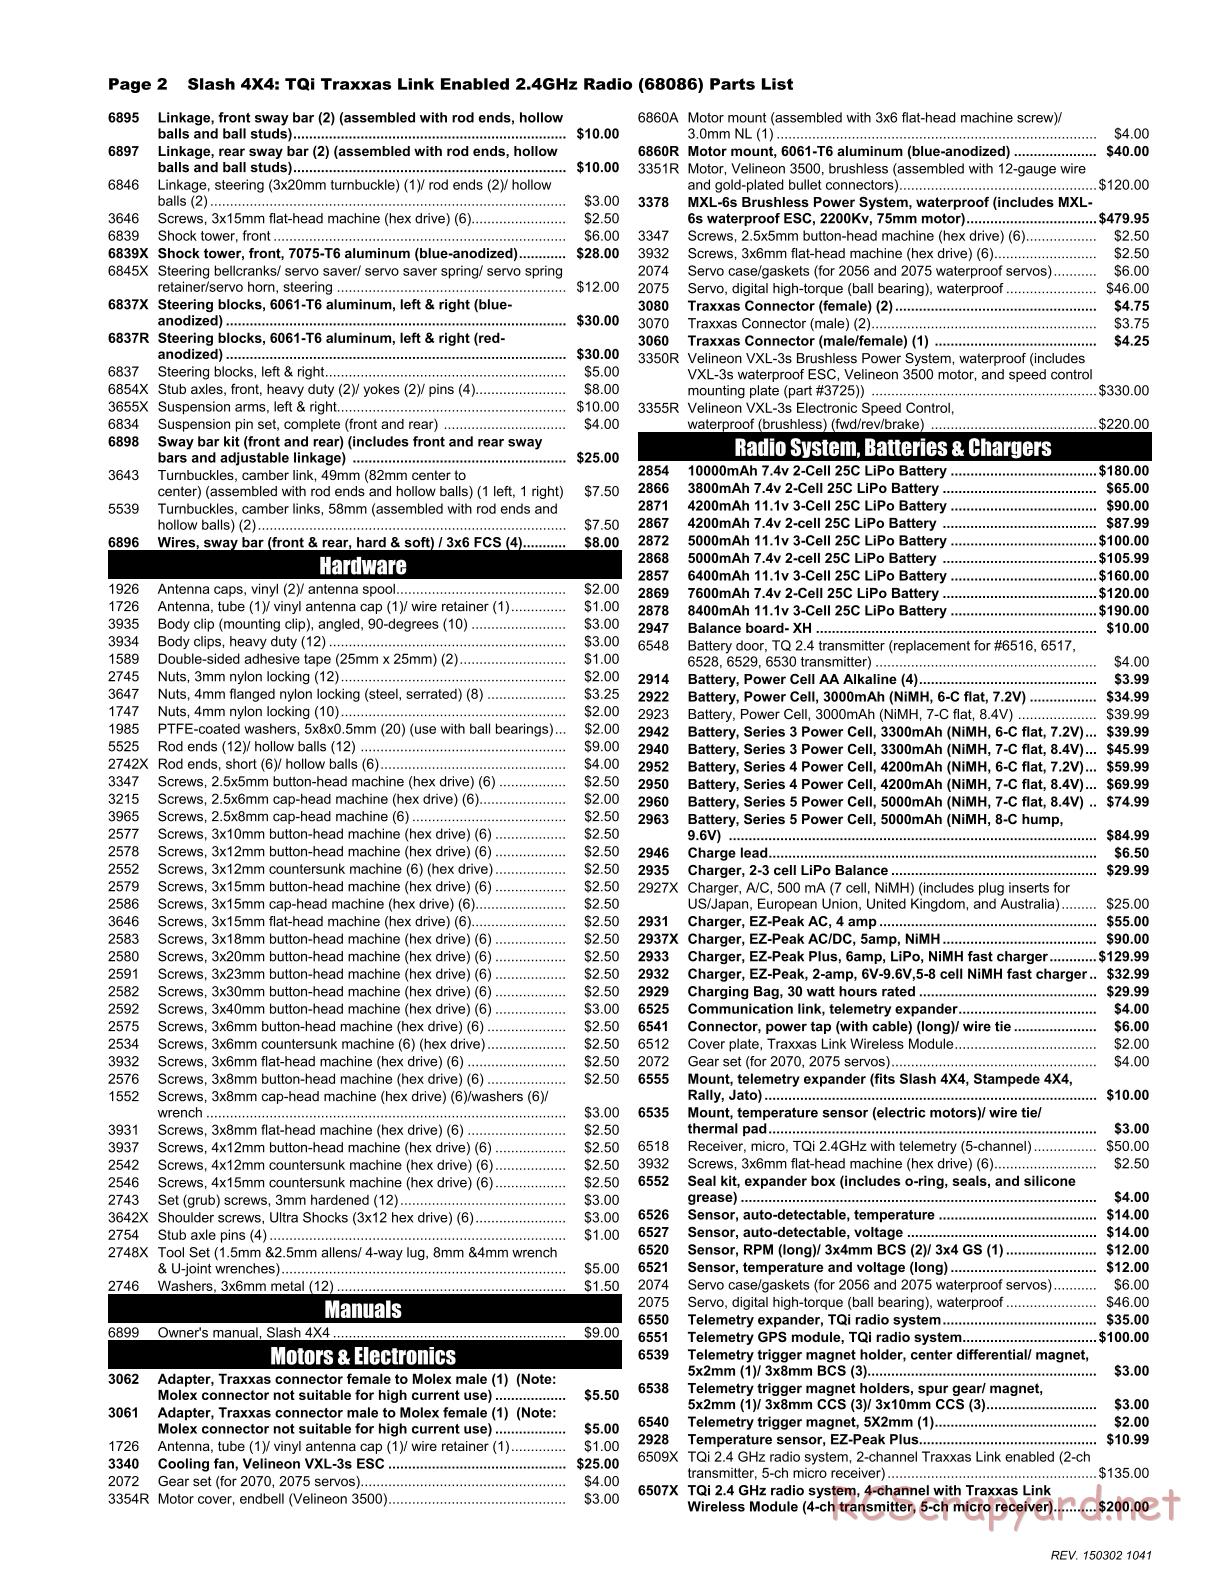 Traxxas - Slash 4x4 (2014) - Parts List - Page 2